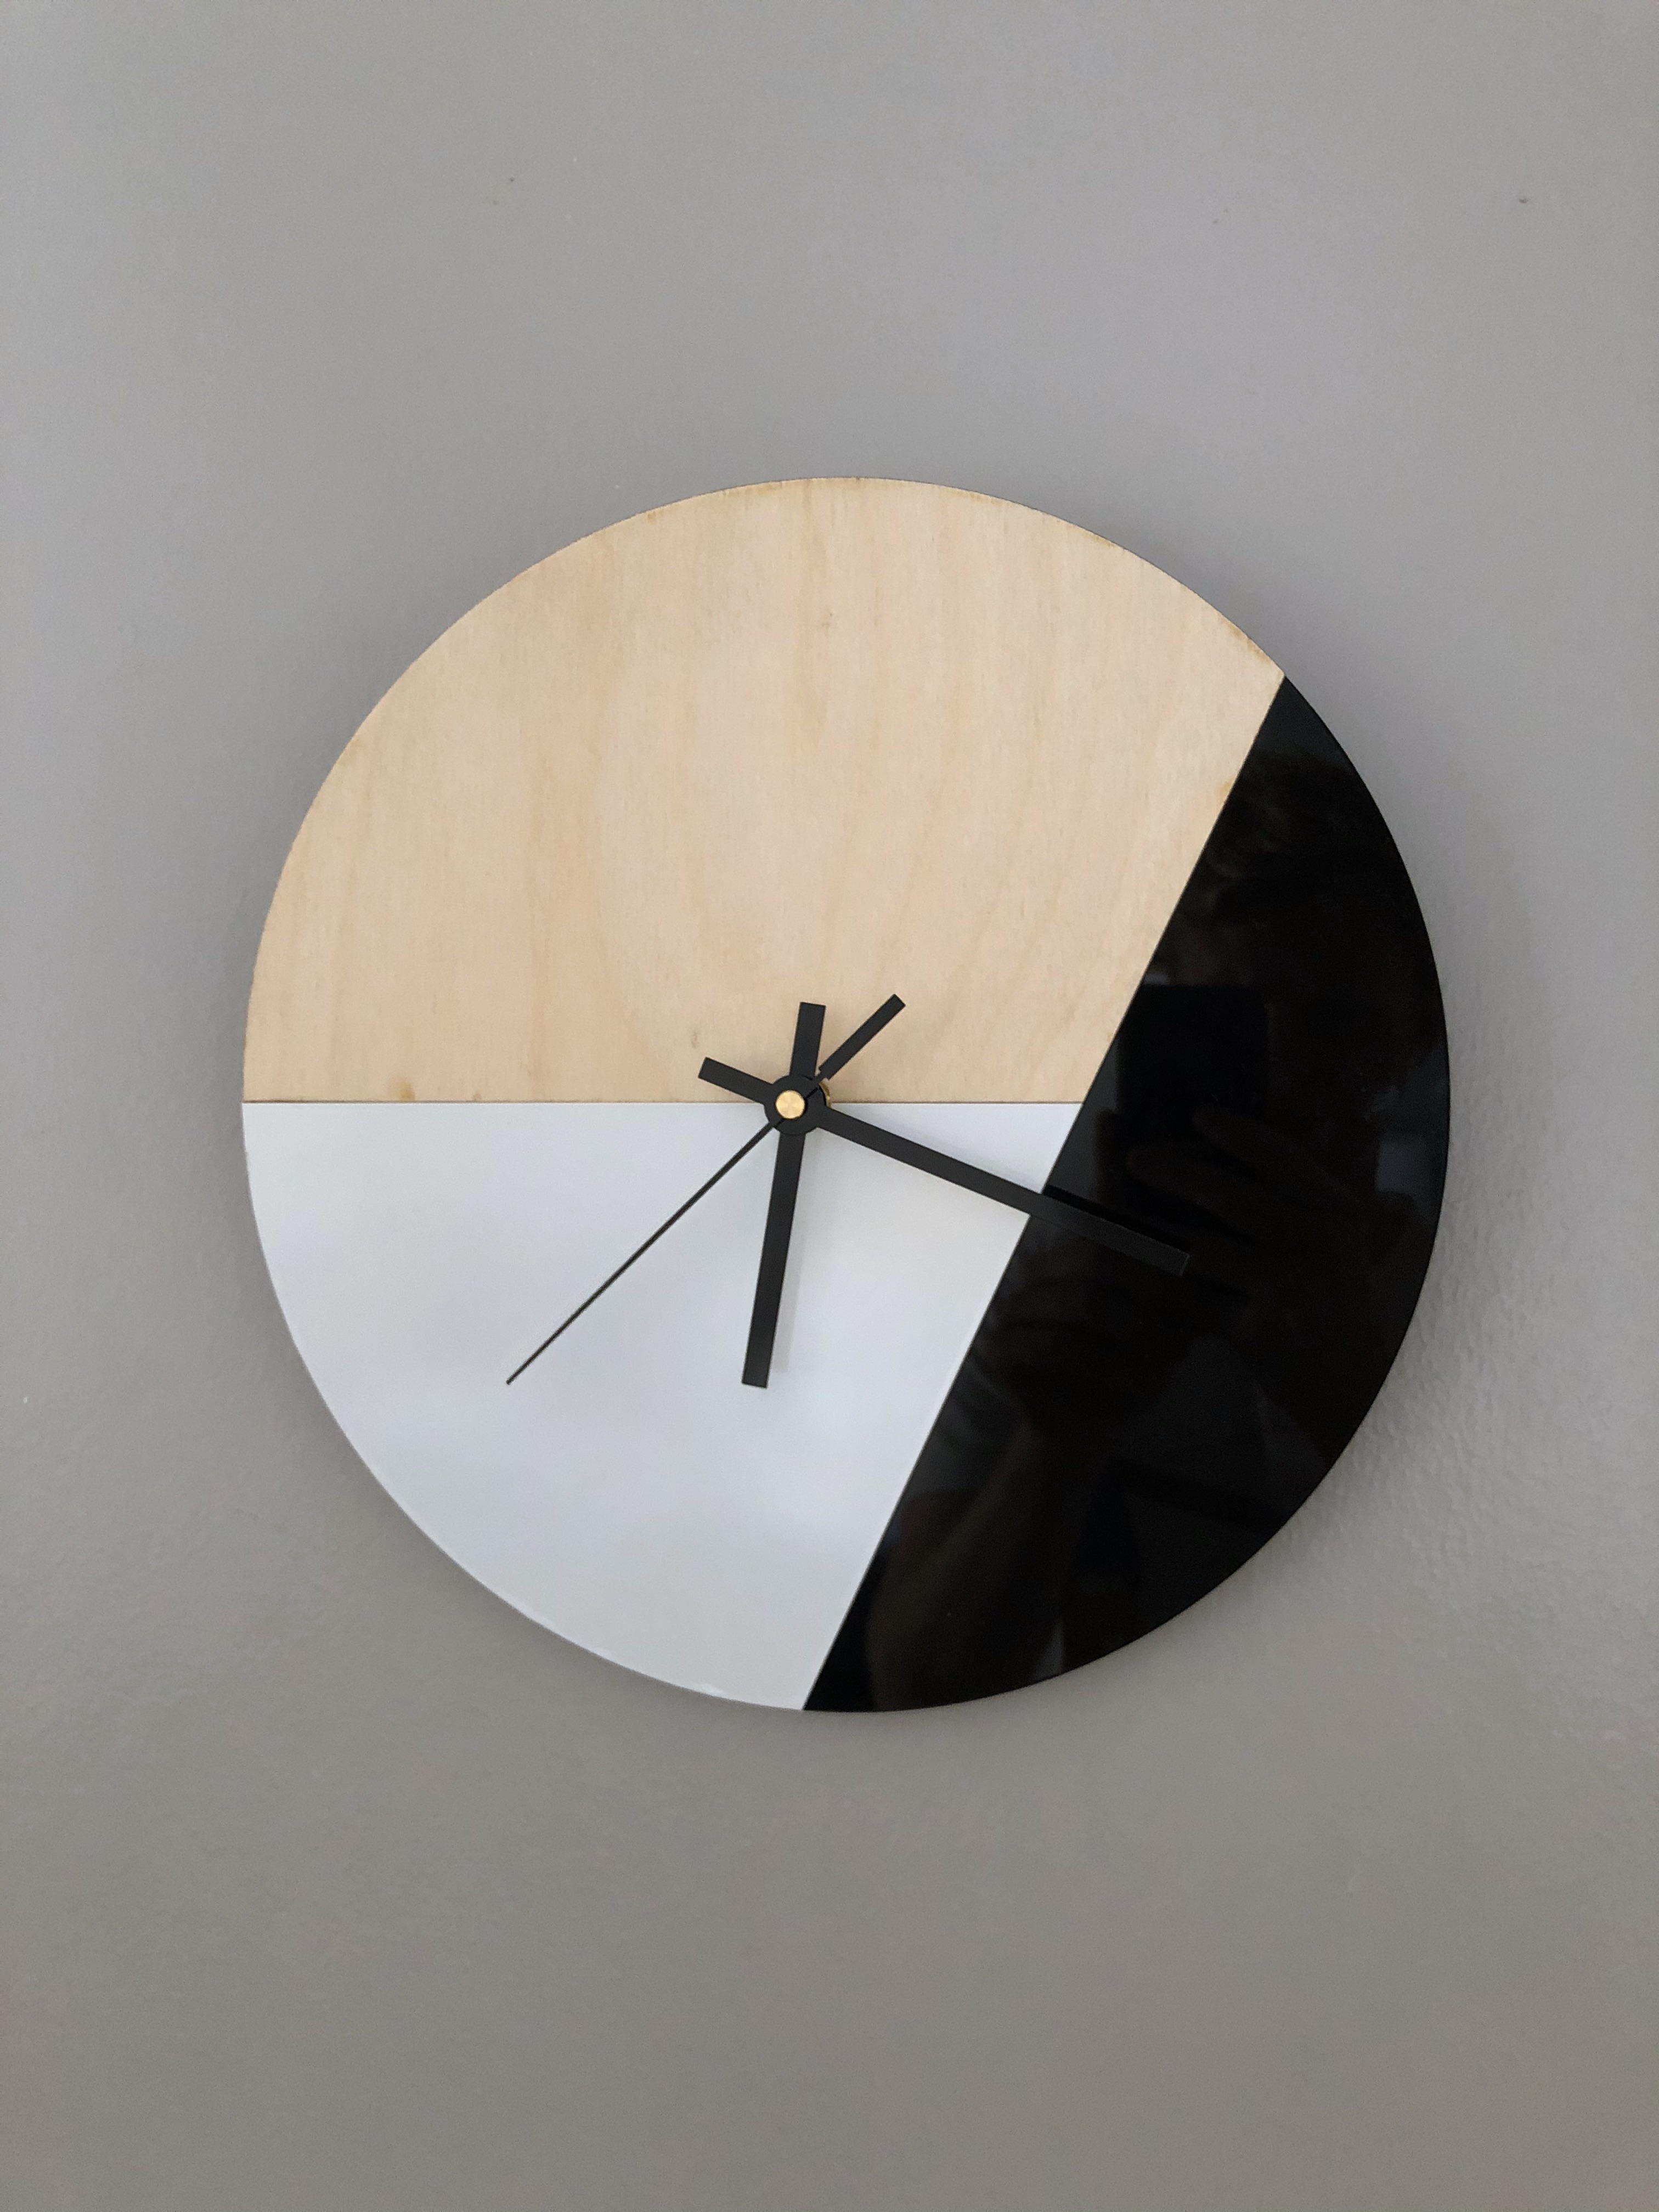 How To Make Homemade Clock Hands